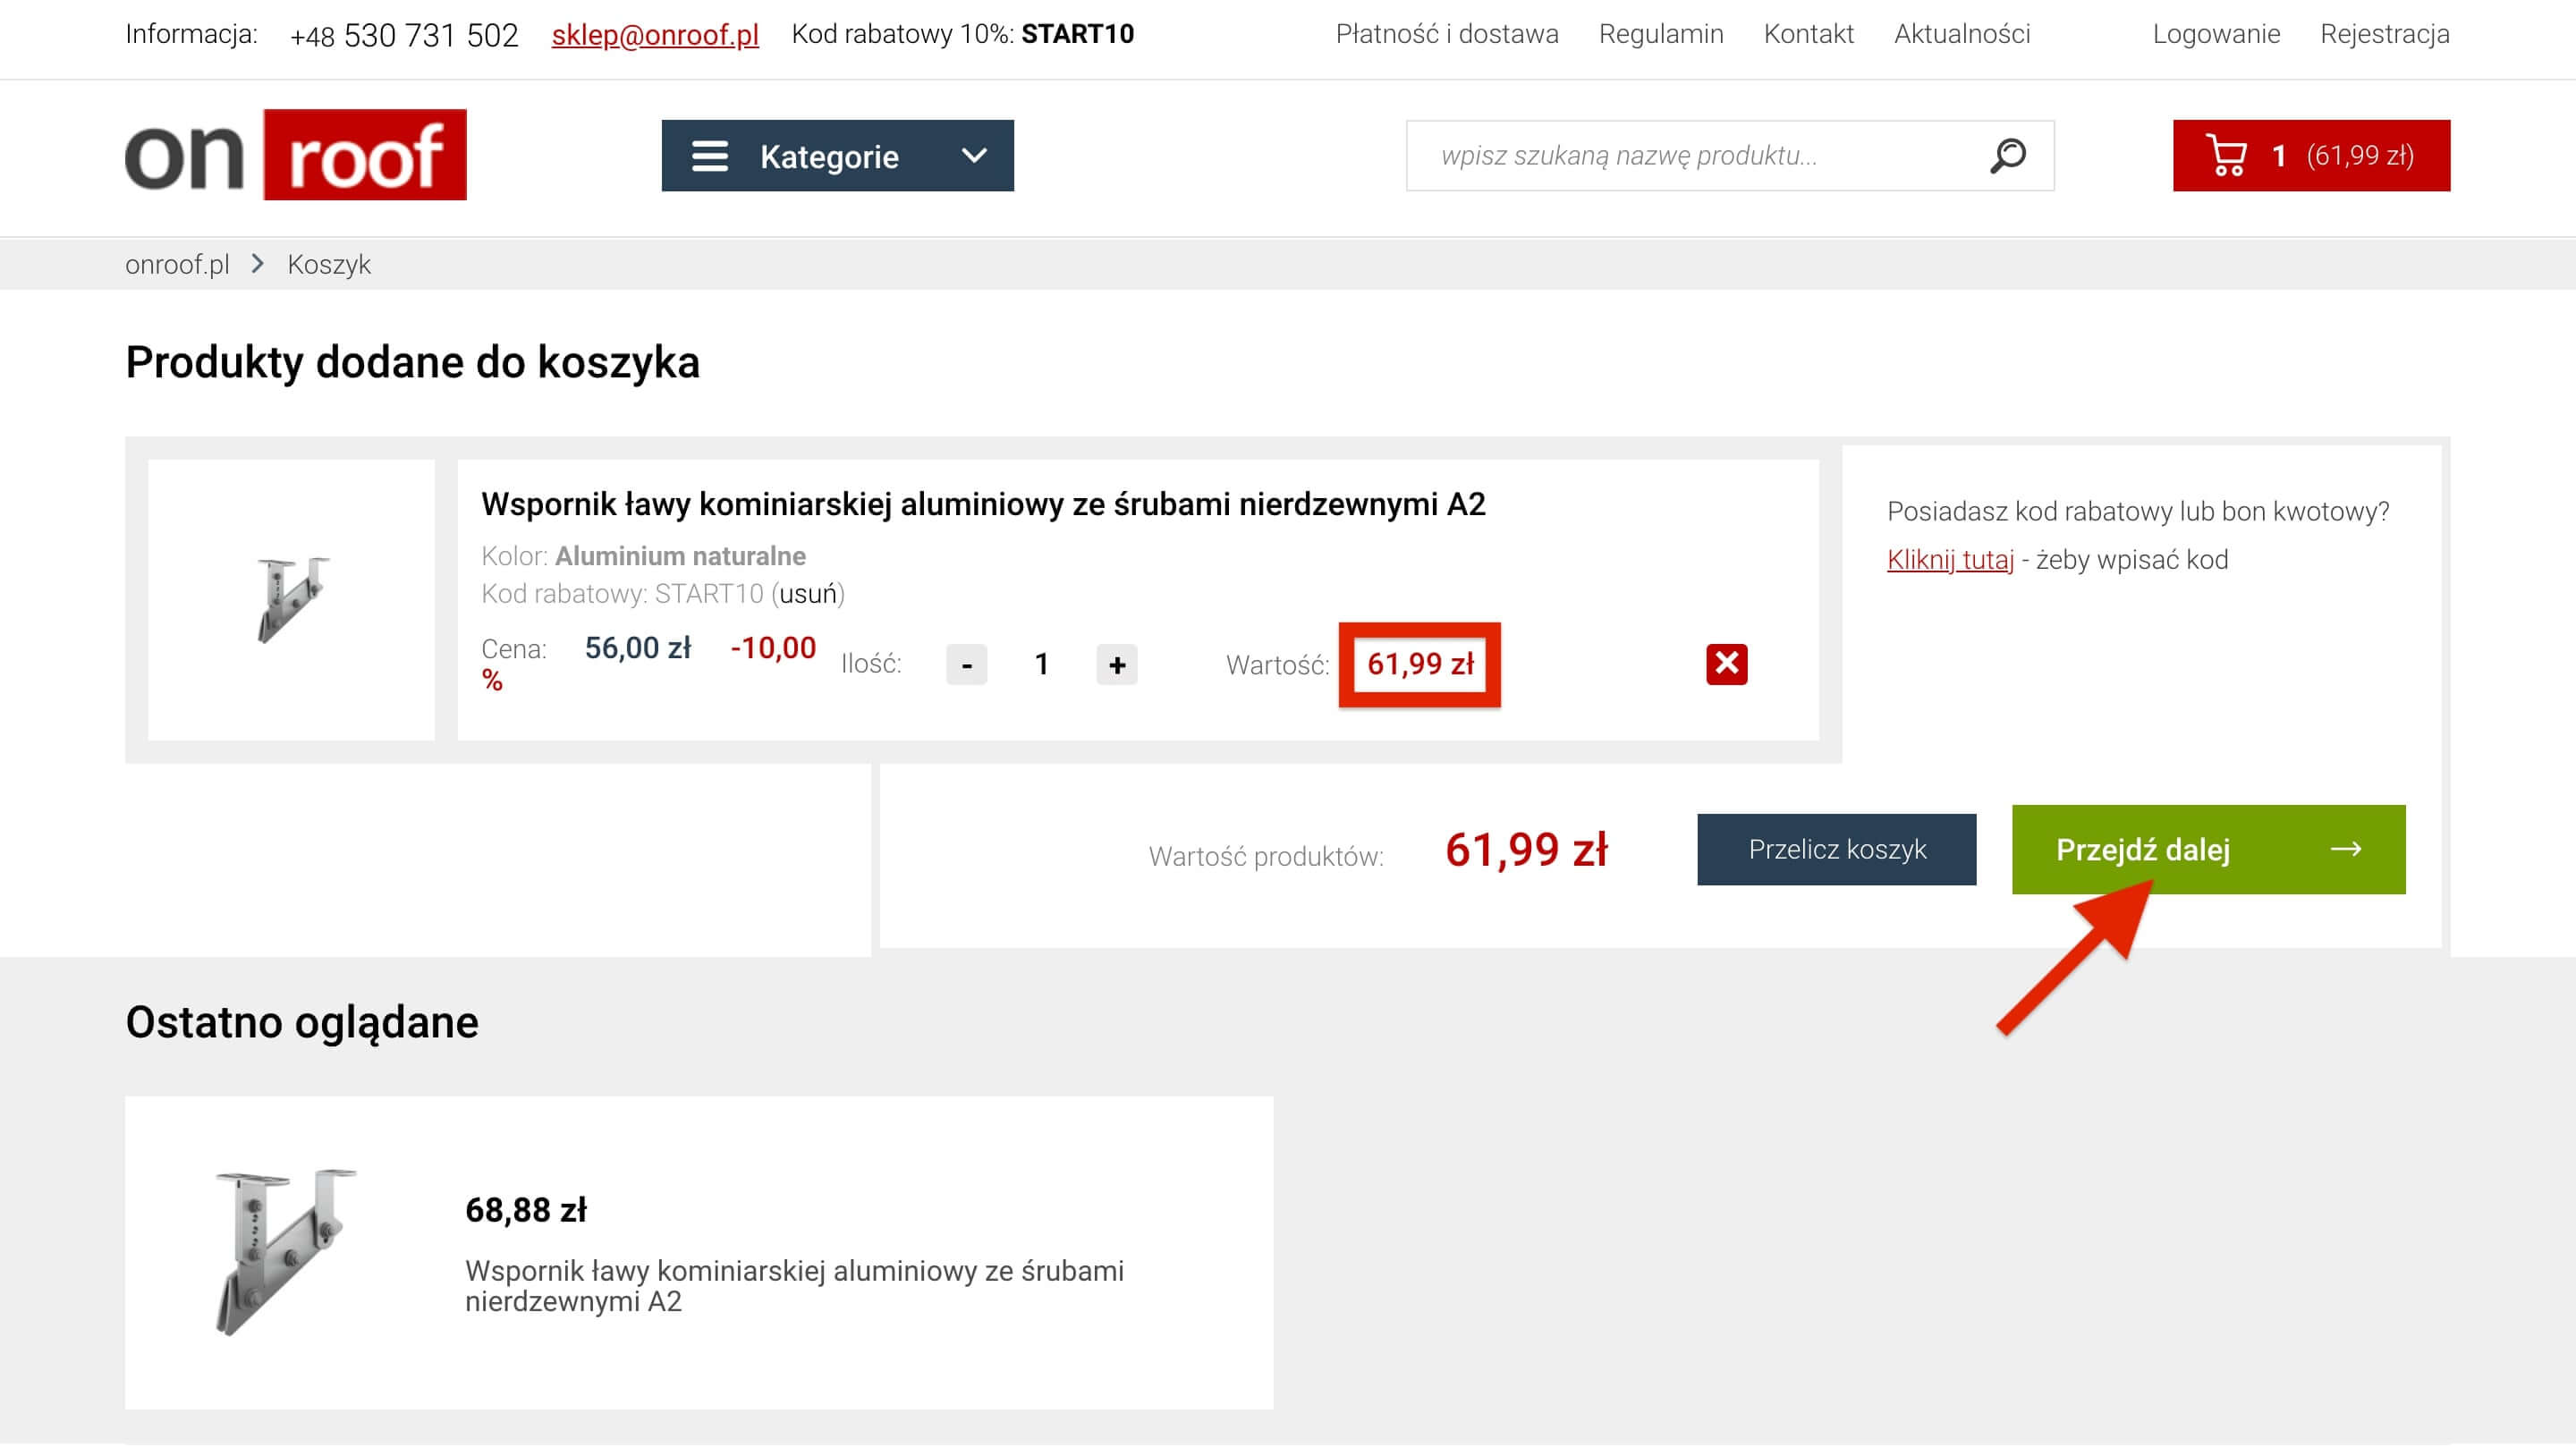 Jak kupować - instrukcja obsługi sklepu onroof.pl - screen 6